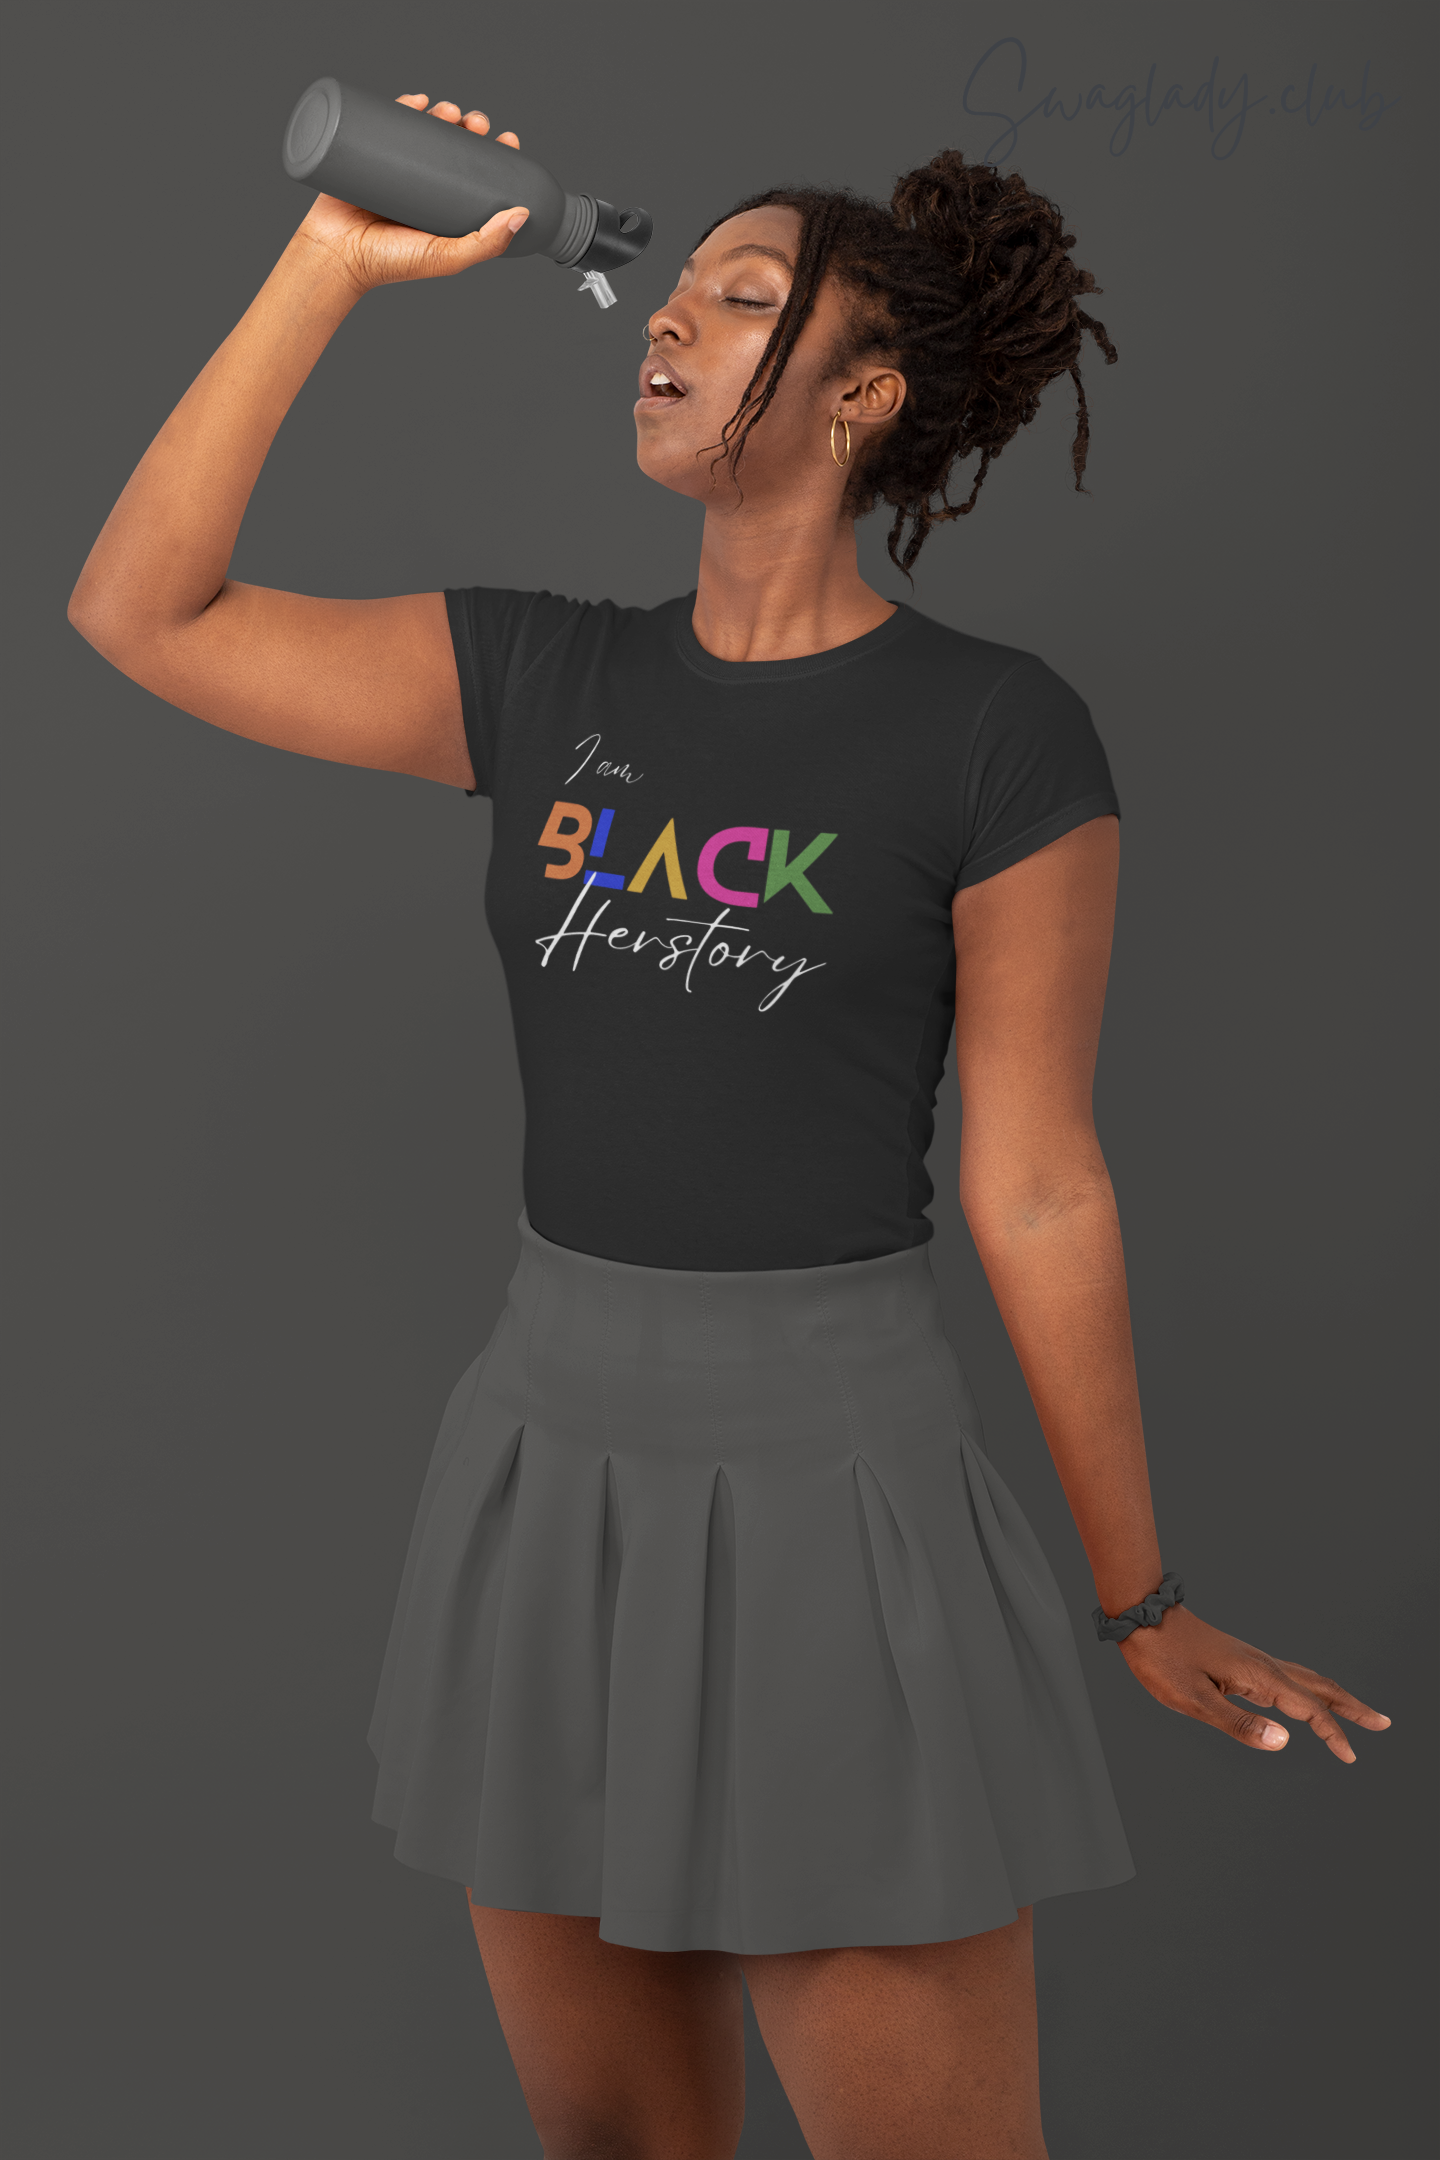 I am BLACK Herstory Unisex t-shirt